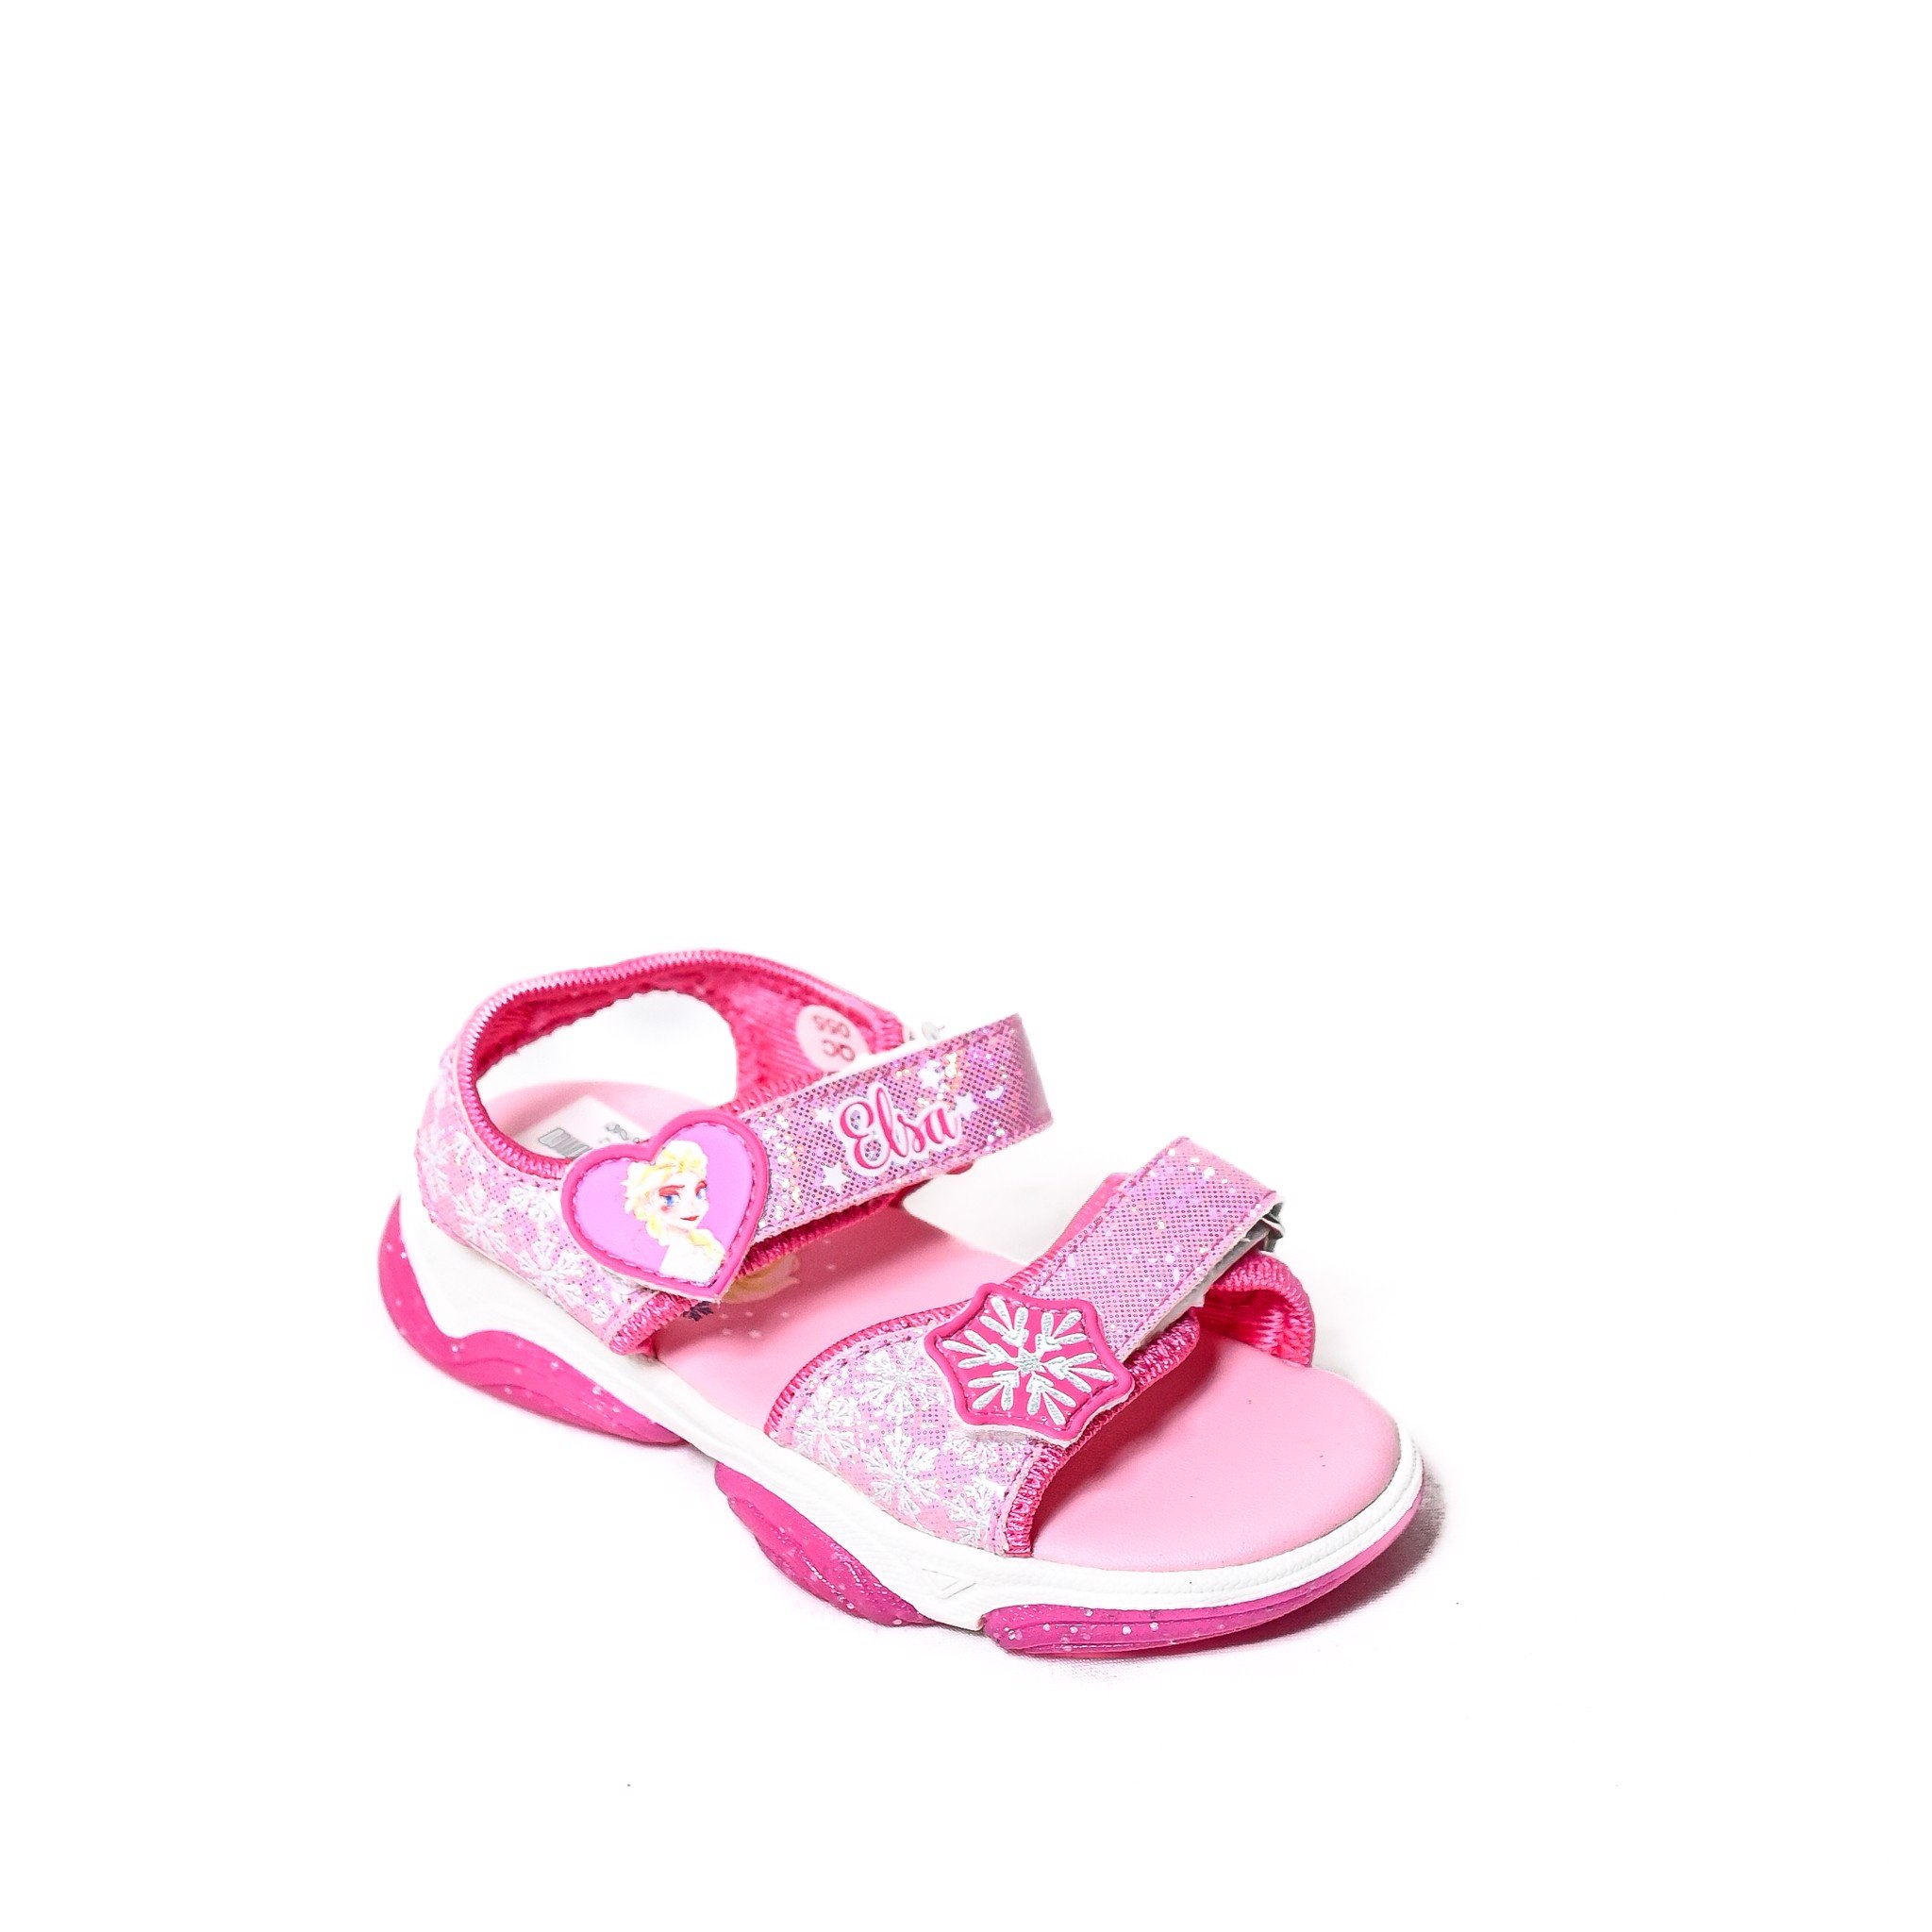 Sandal Bitis bé gái (size 24-30)